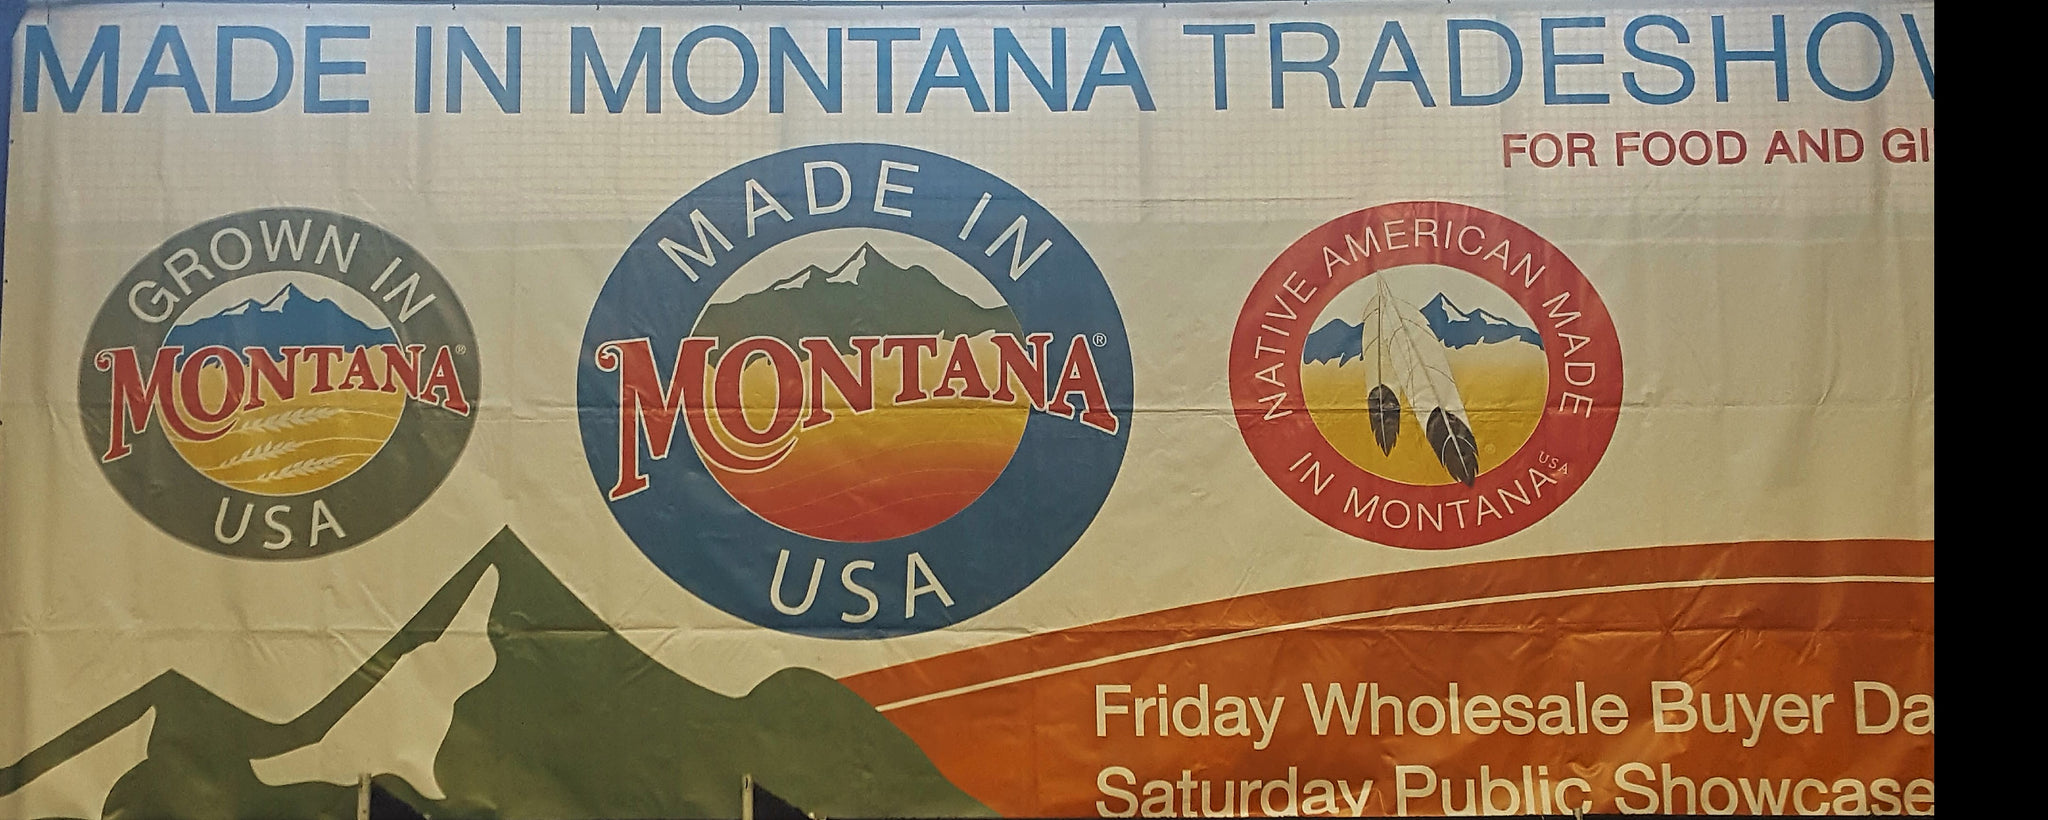 Made in Montana Tradeshow